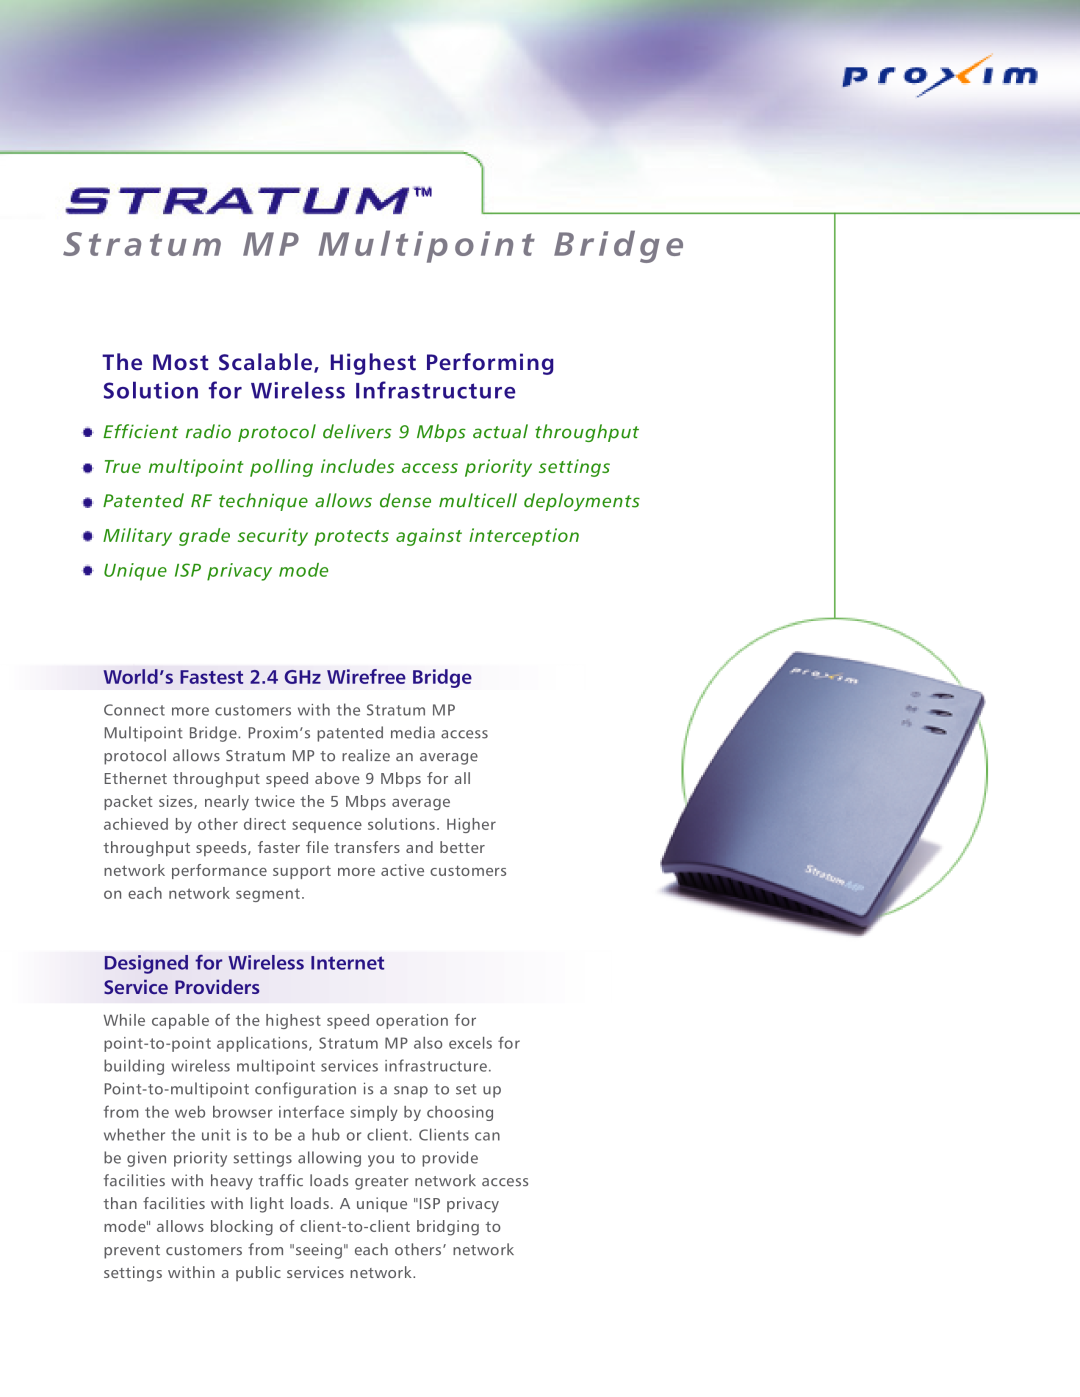 Proxim Stratum manual World’s Fastest 2.4 GHz Wirefree Bridge, Designed for Wireless Internet Service Providers 